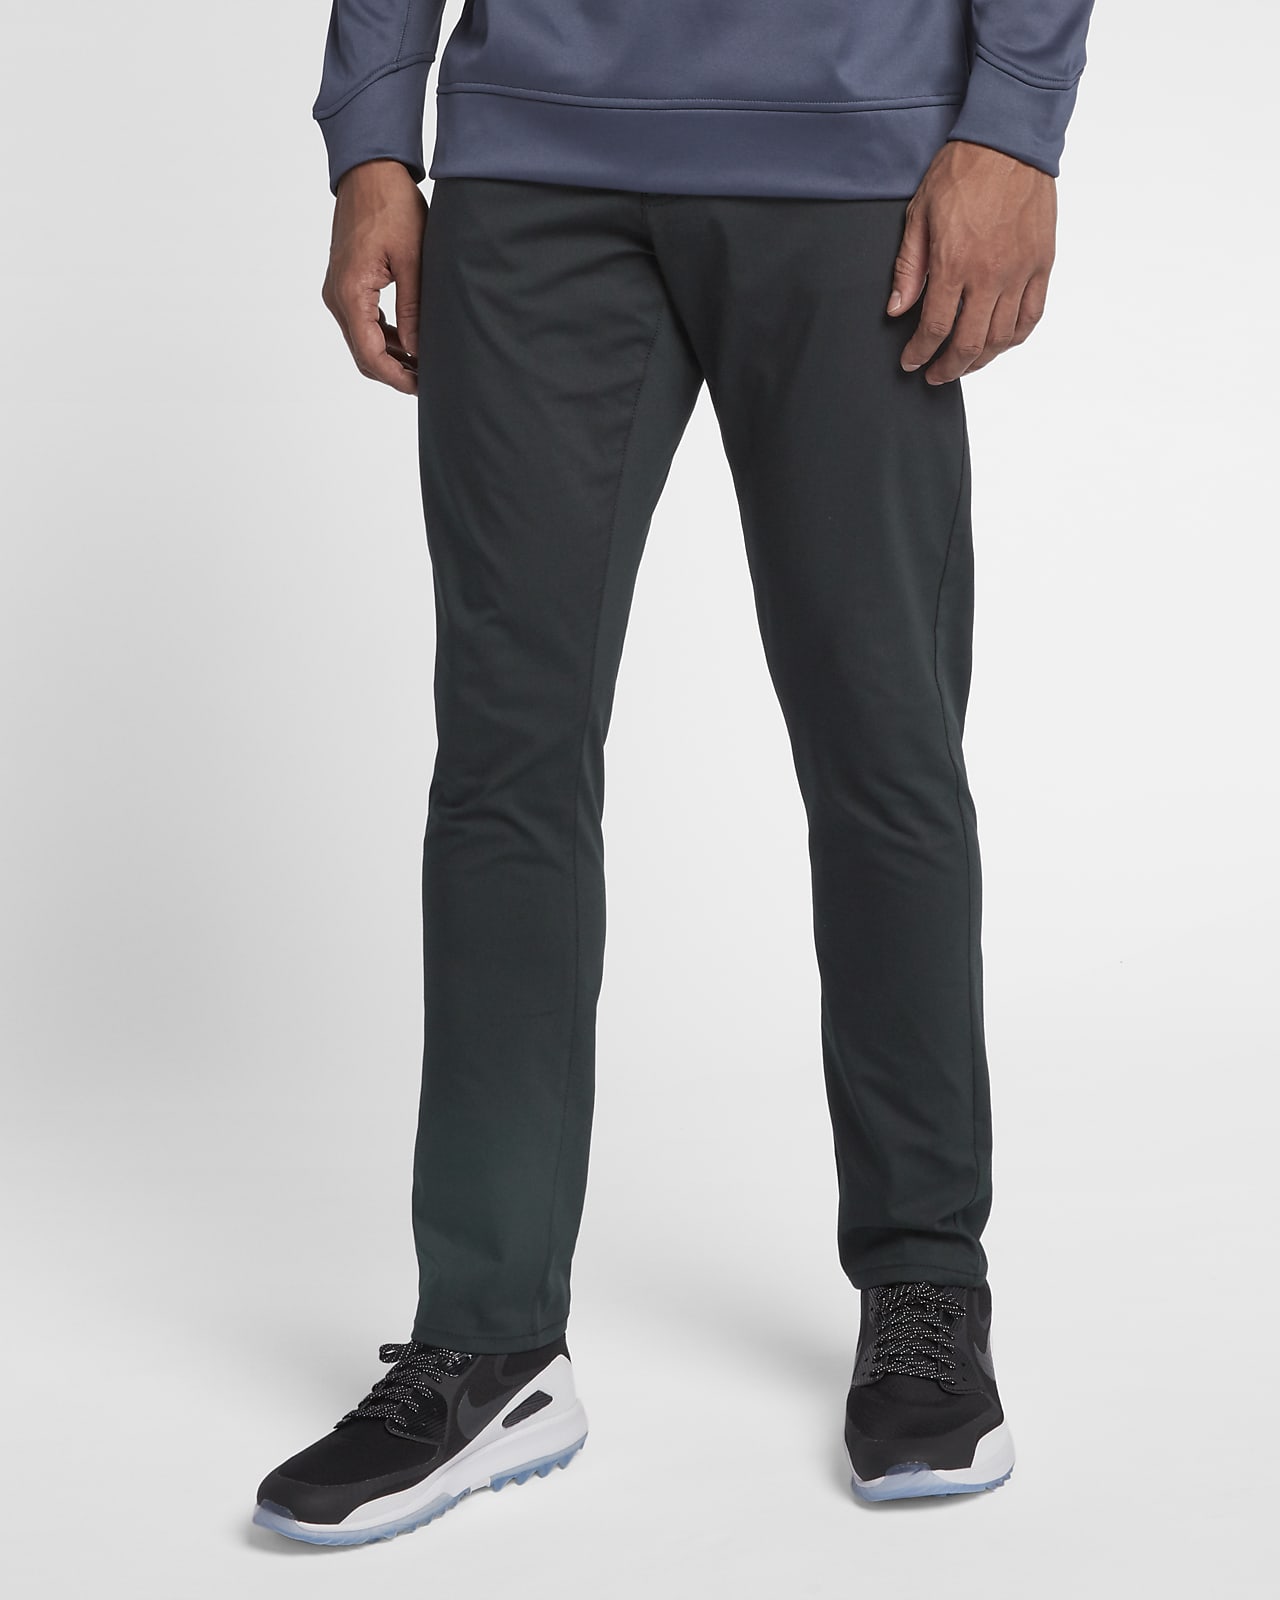 Pocket Men's Slim-Fit Golf Pants. Nike SA